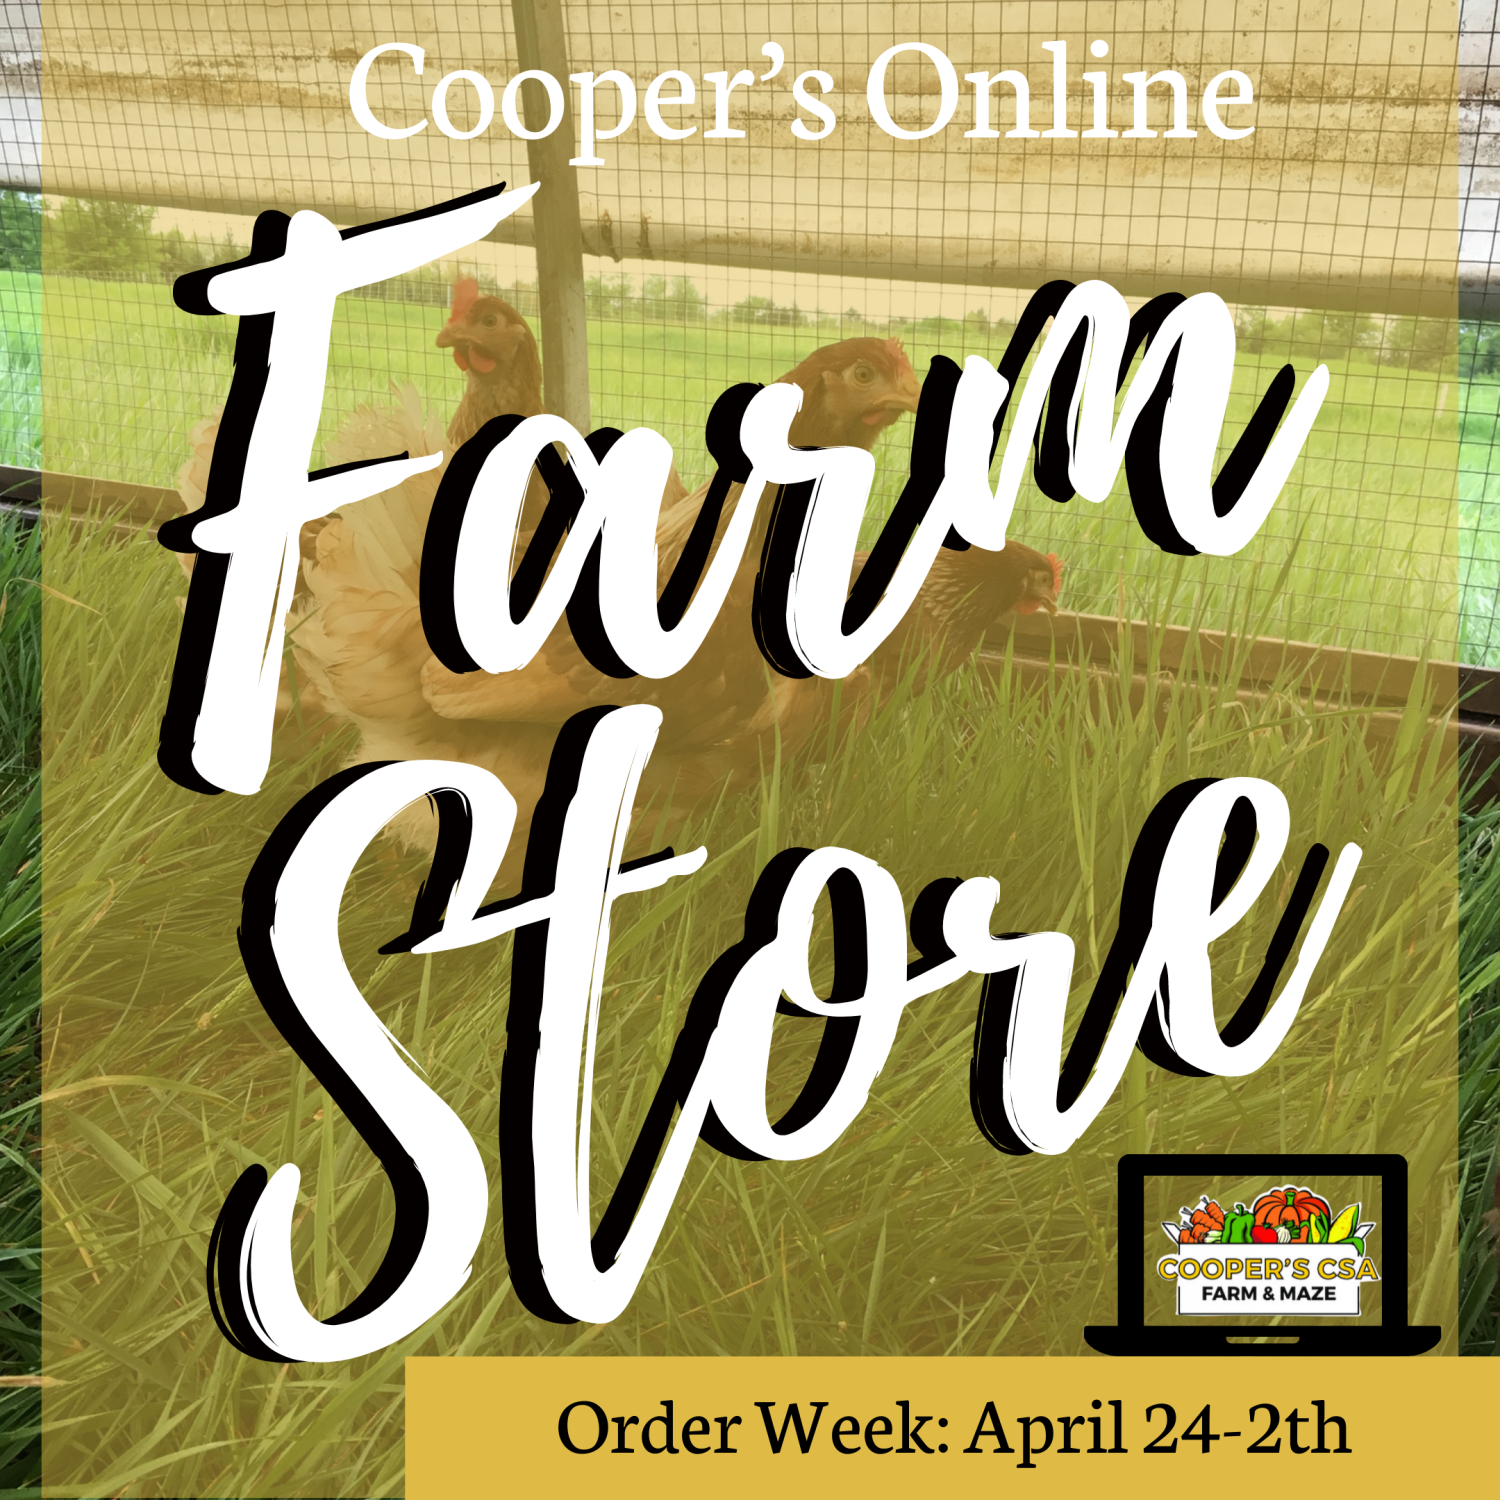 Previous Happening: Coopers CSA Online FarmStore- Order Week April 24-27th